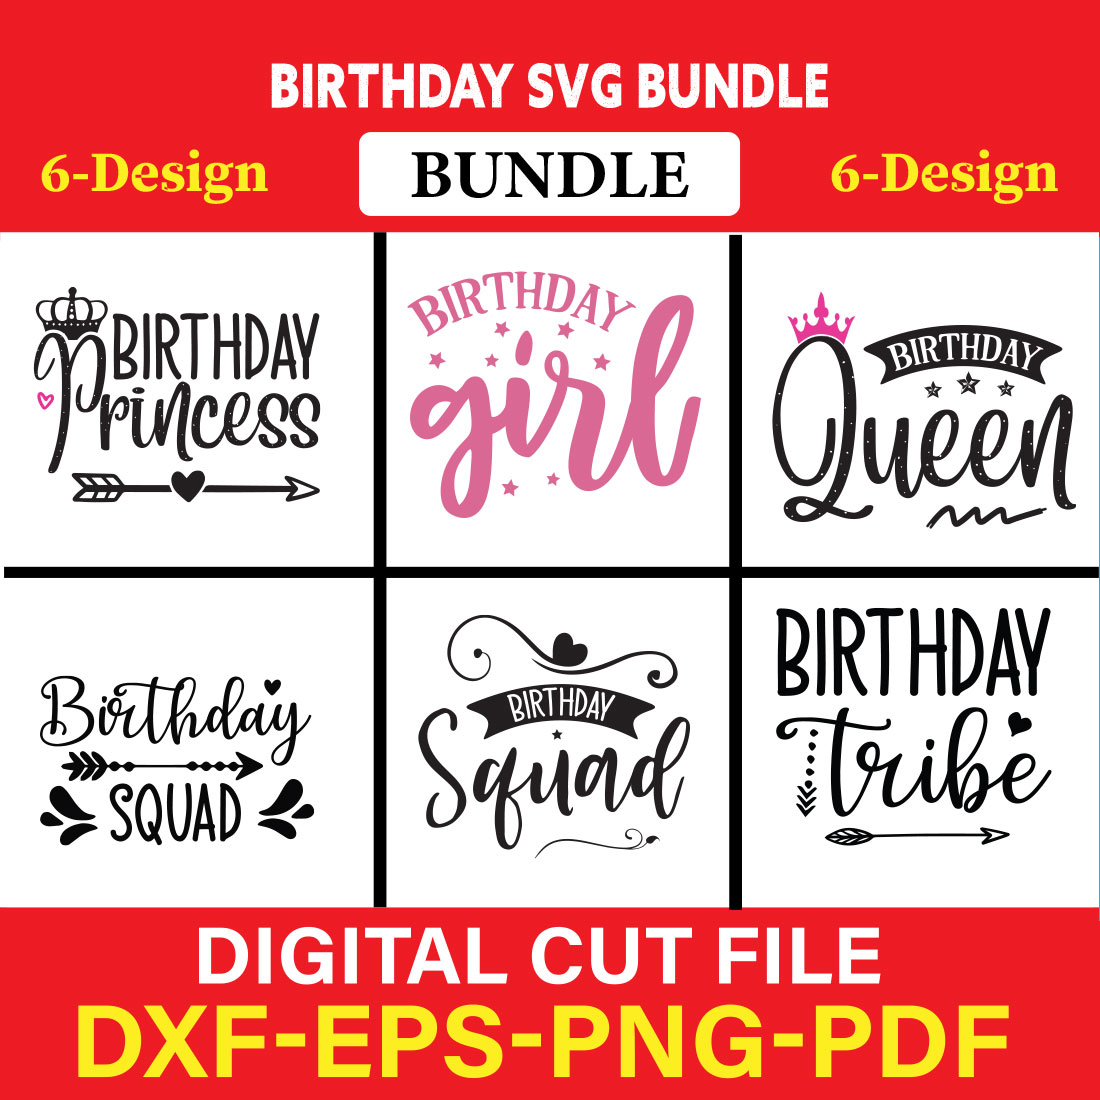 Birthday T-shirt Design Bundle Vol-3 cover image.